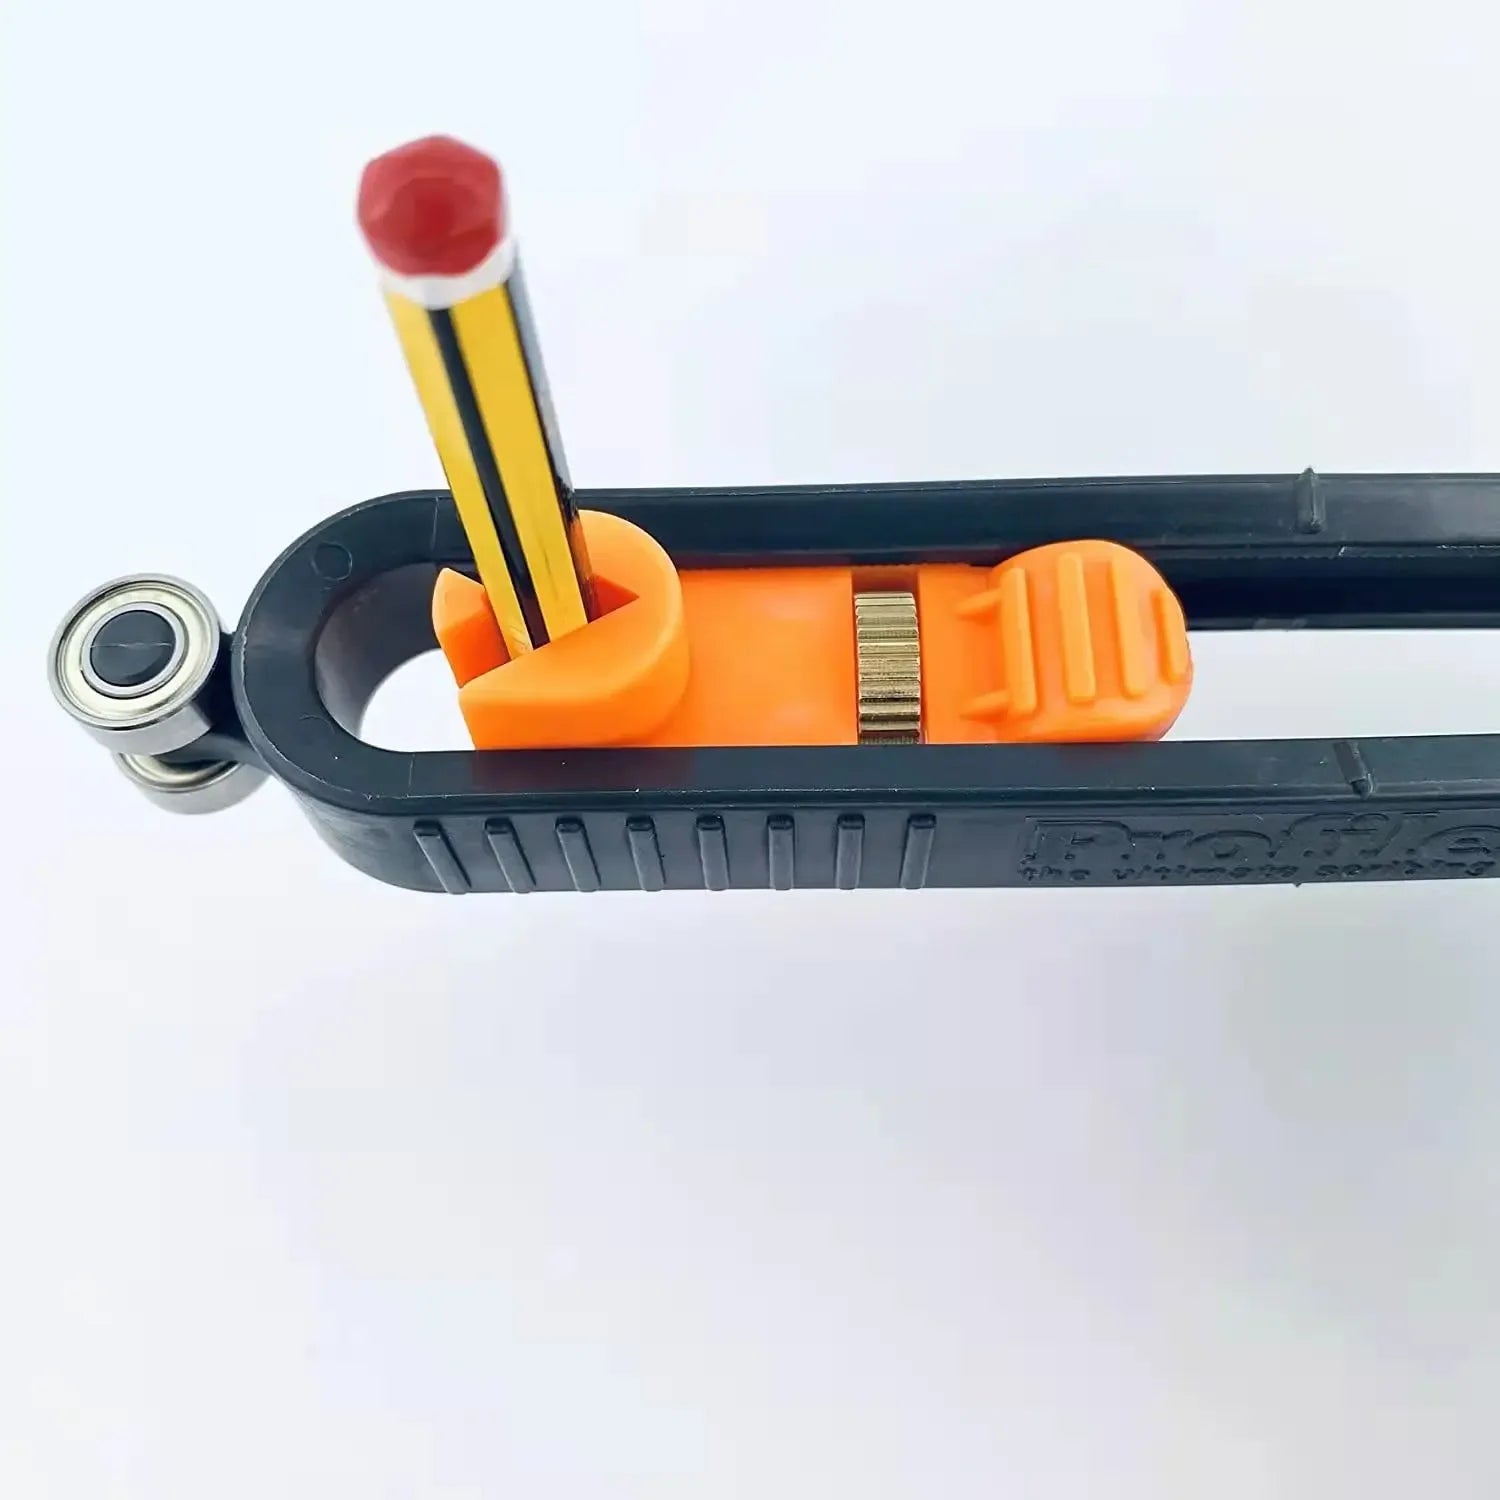 Scribing Tool - Woodworking Gauge Set Profile Scribing Ruler Contour with Lock Adjustable